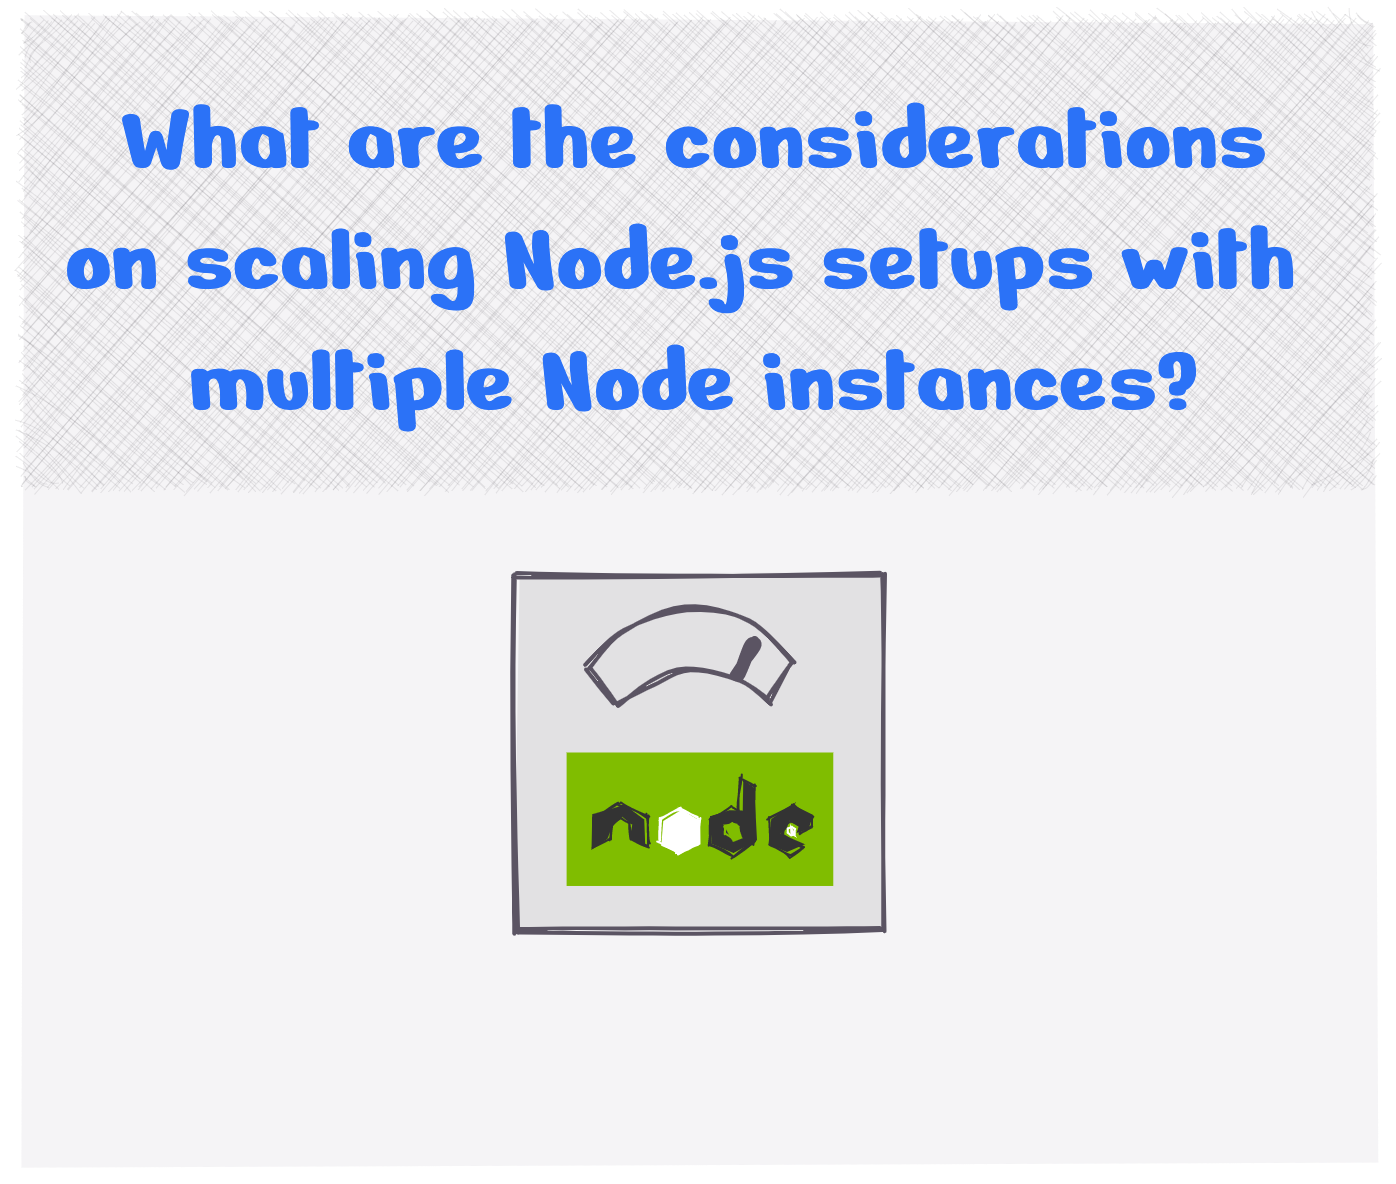 Considerations when scaling Node.js setups with multiple Node instances